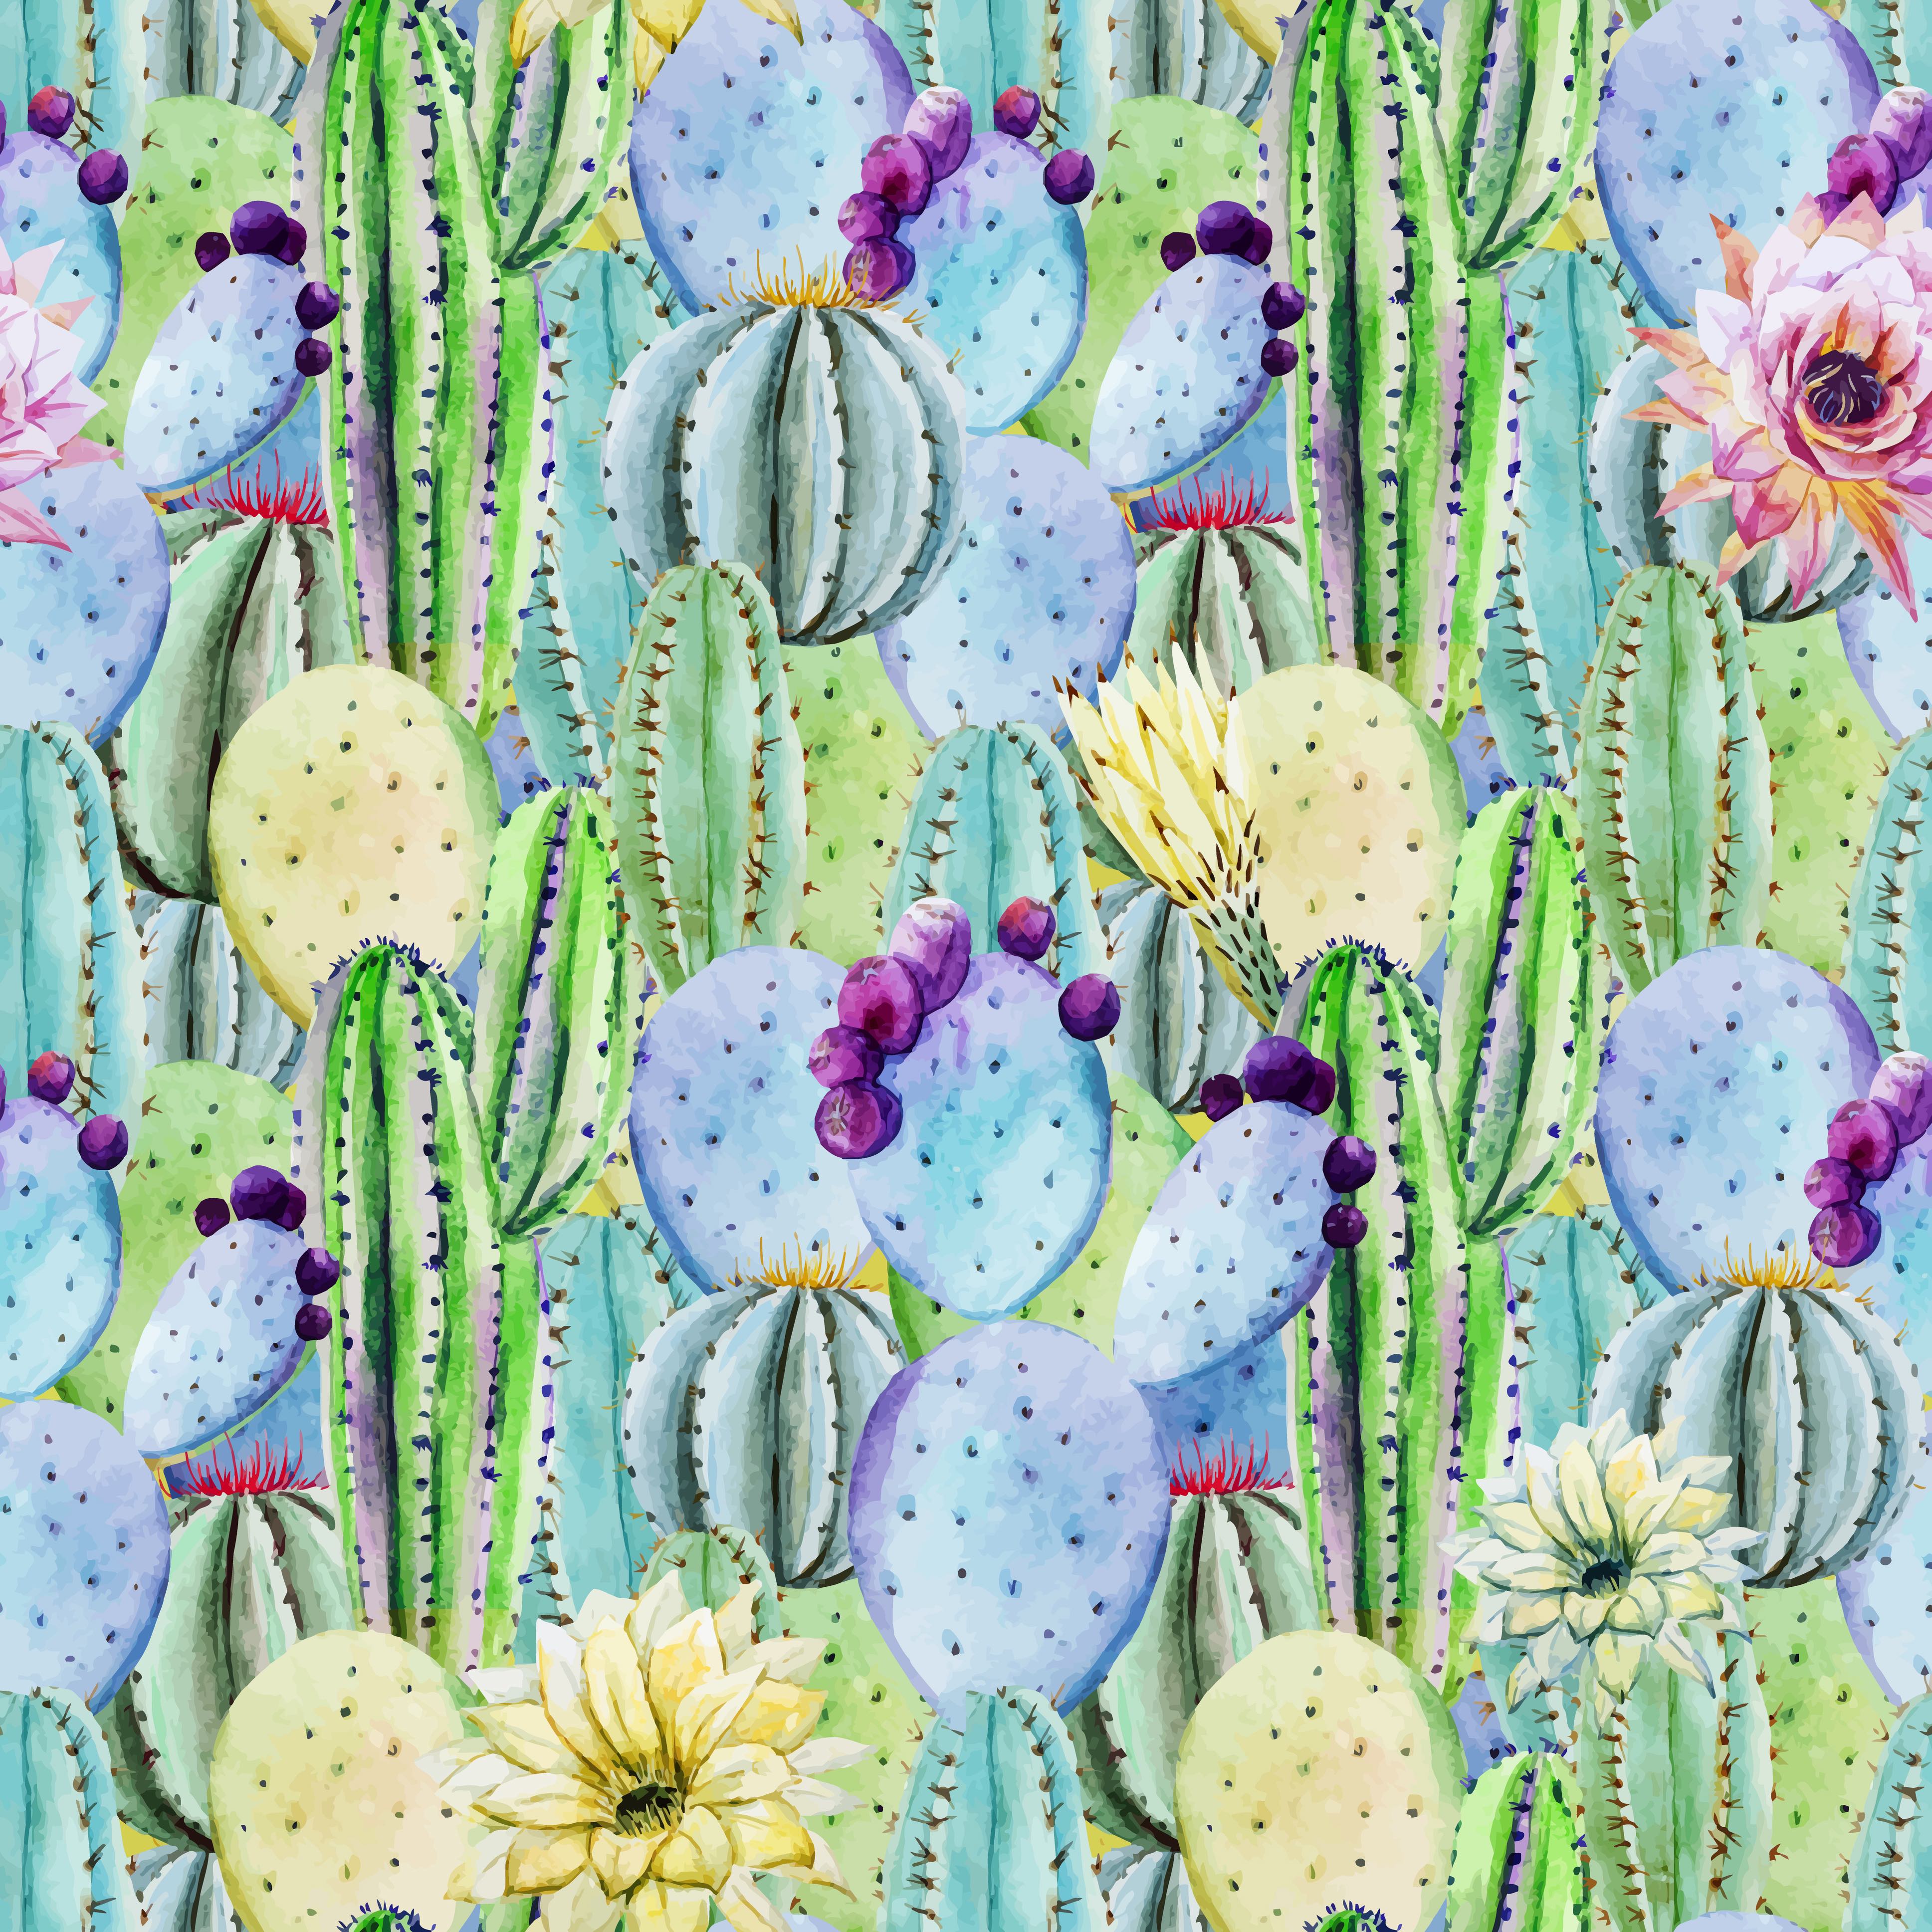 Cactus seamless patterns